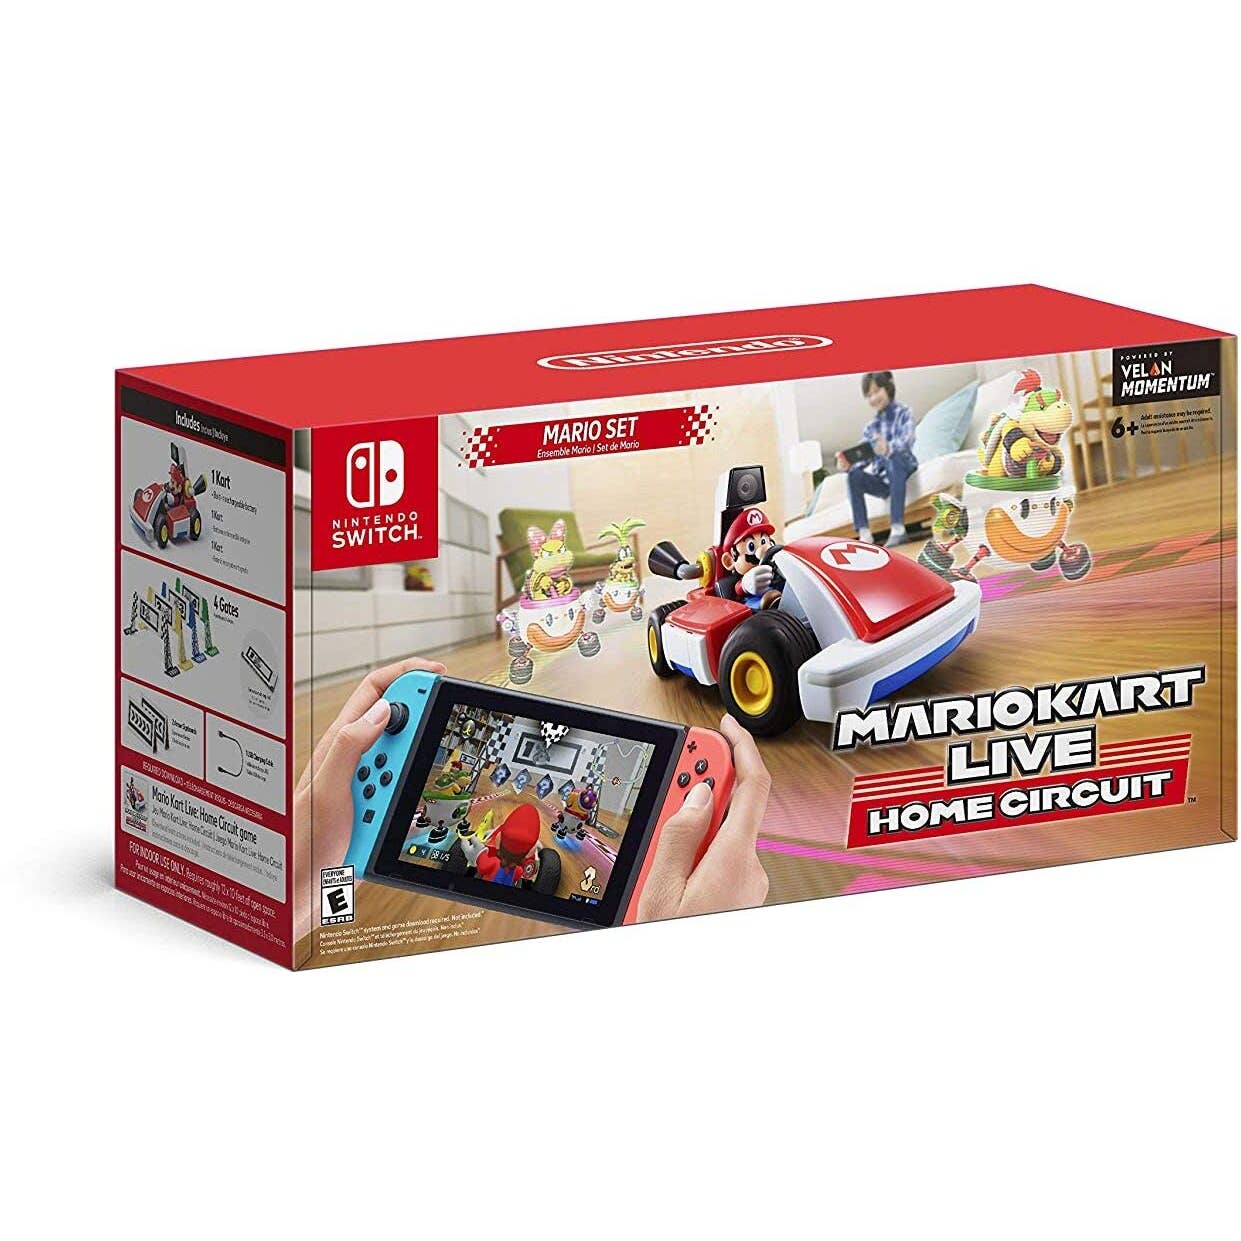 Nintendo- HACRRMAAA Mario Kart Live: Home Circuit -Mario Set - Nintendo Switch Mario Set Edition